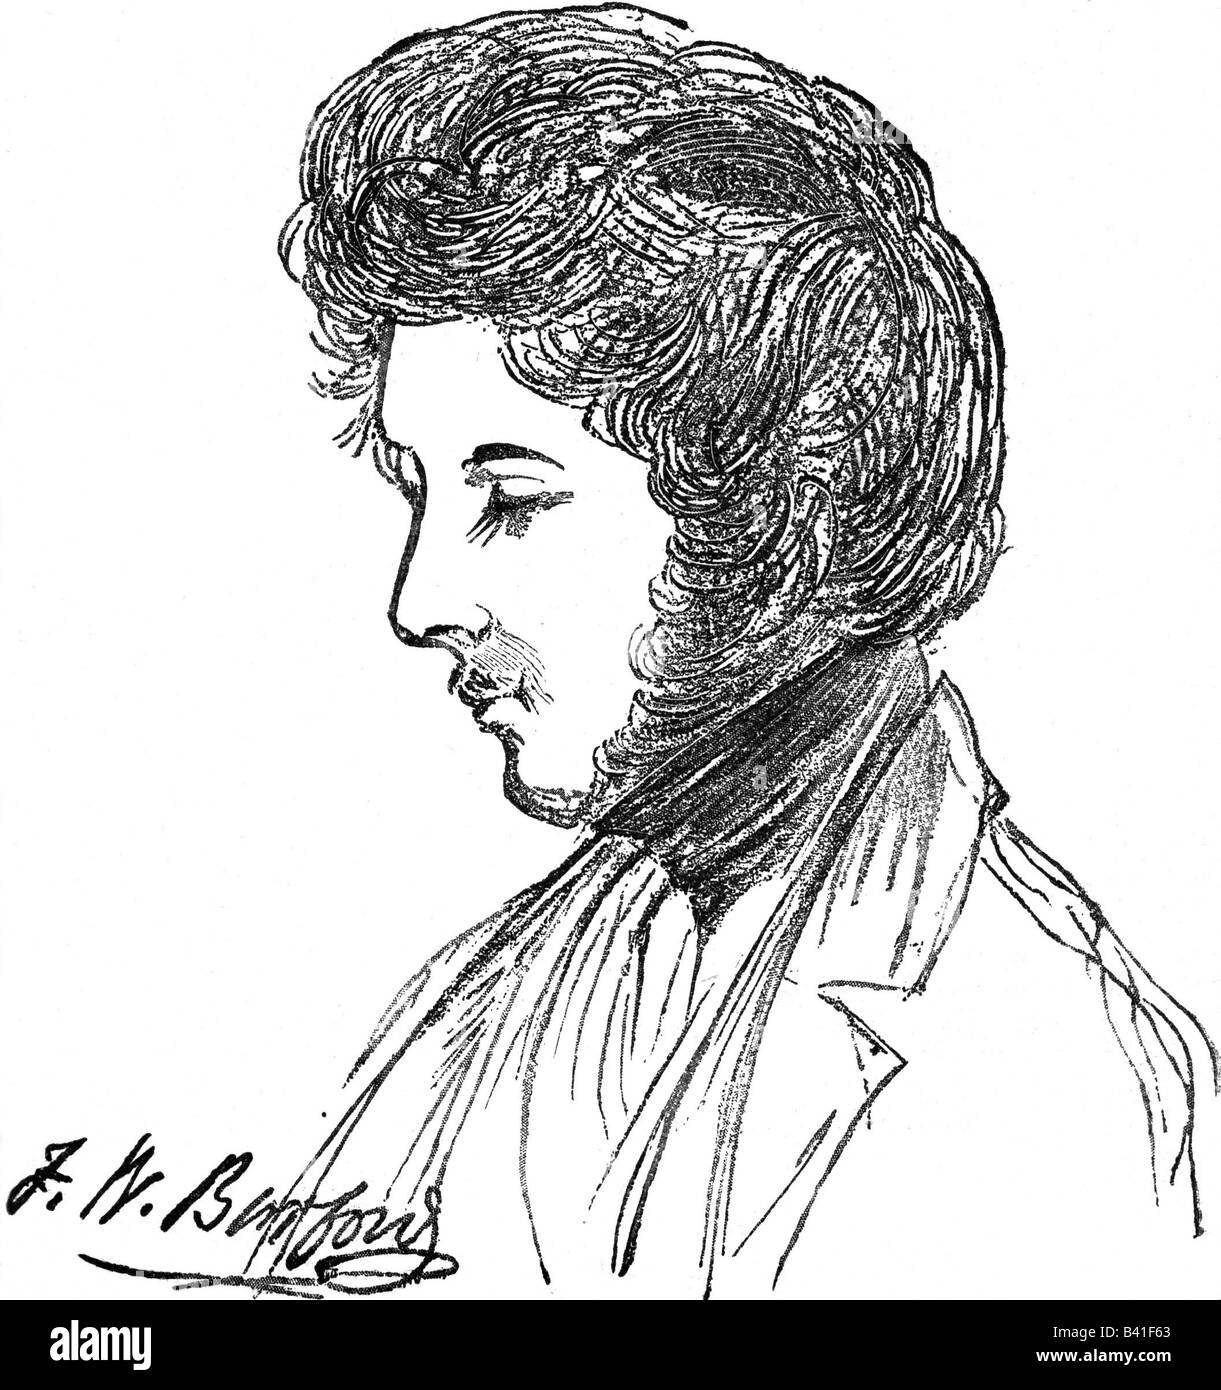 Fontane, Theodor, 30.12.1819 - 20.9.1898, German author / writer, poet, early portrait, drawing by Burton, circa 1844, 19th century, , Stock Photo